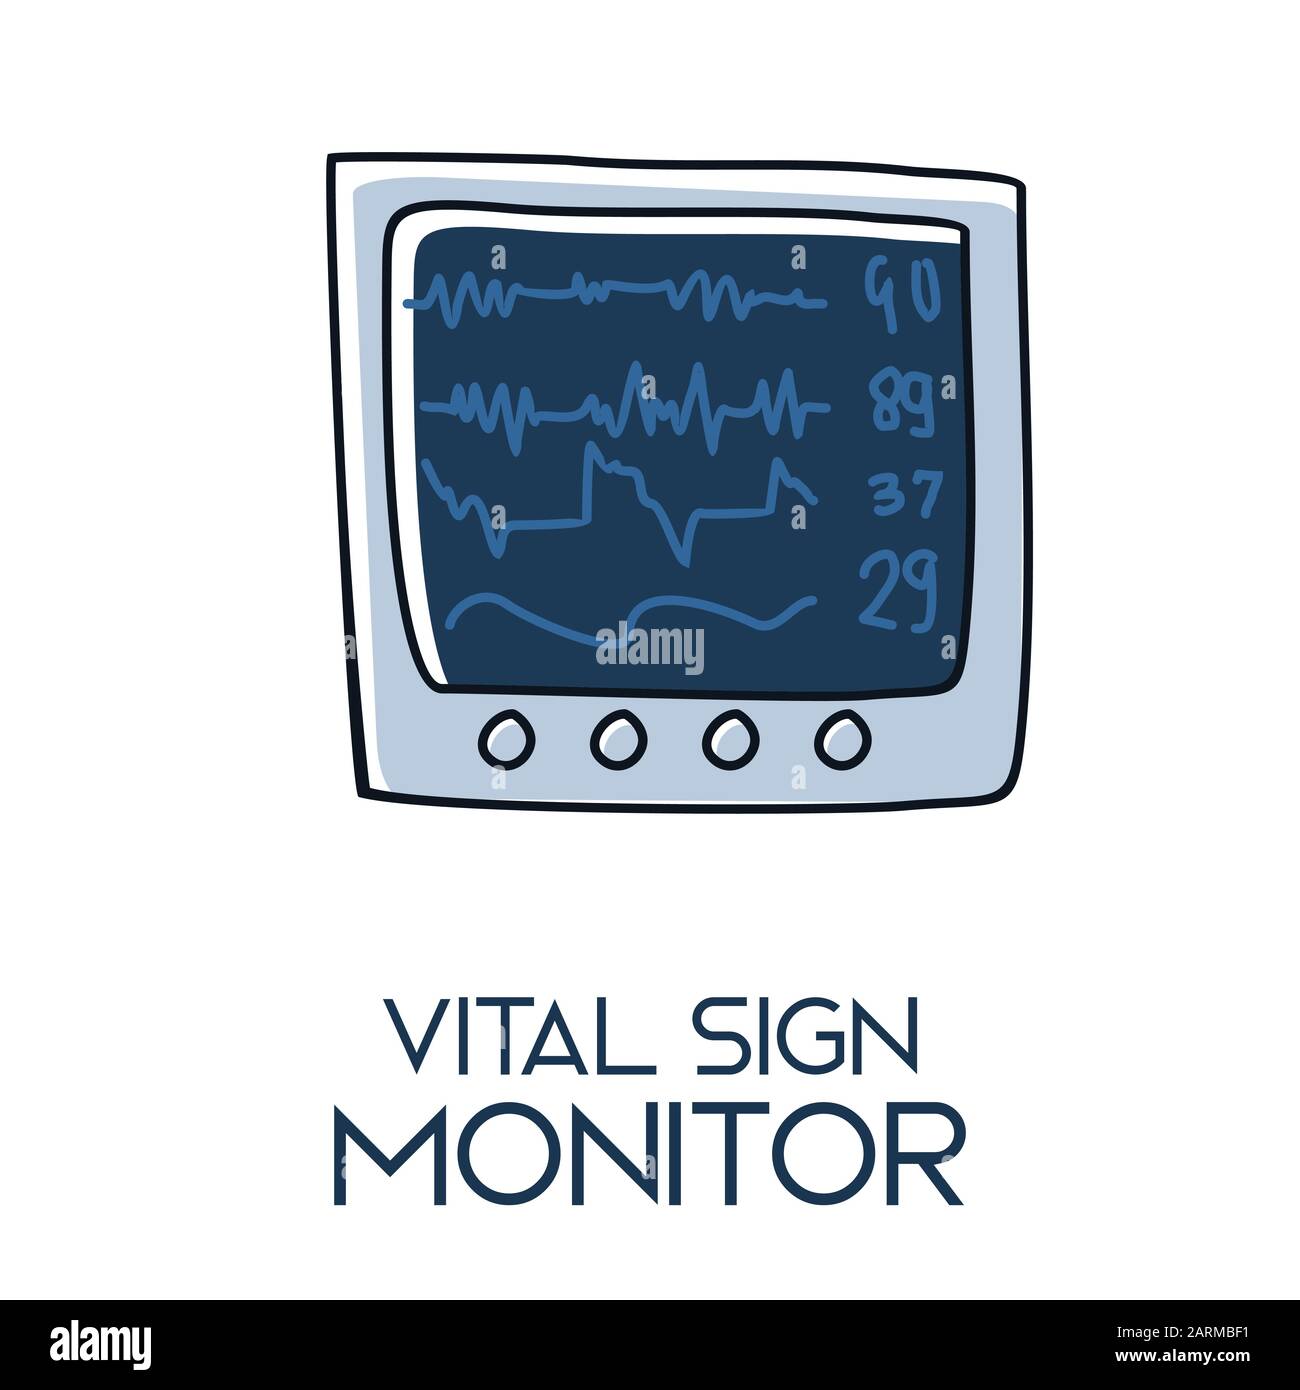 Ekg vital sign monitor minimalist out line hand drawn medic flat icon illustration Stock Vector